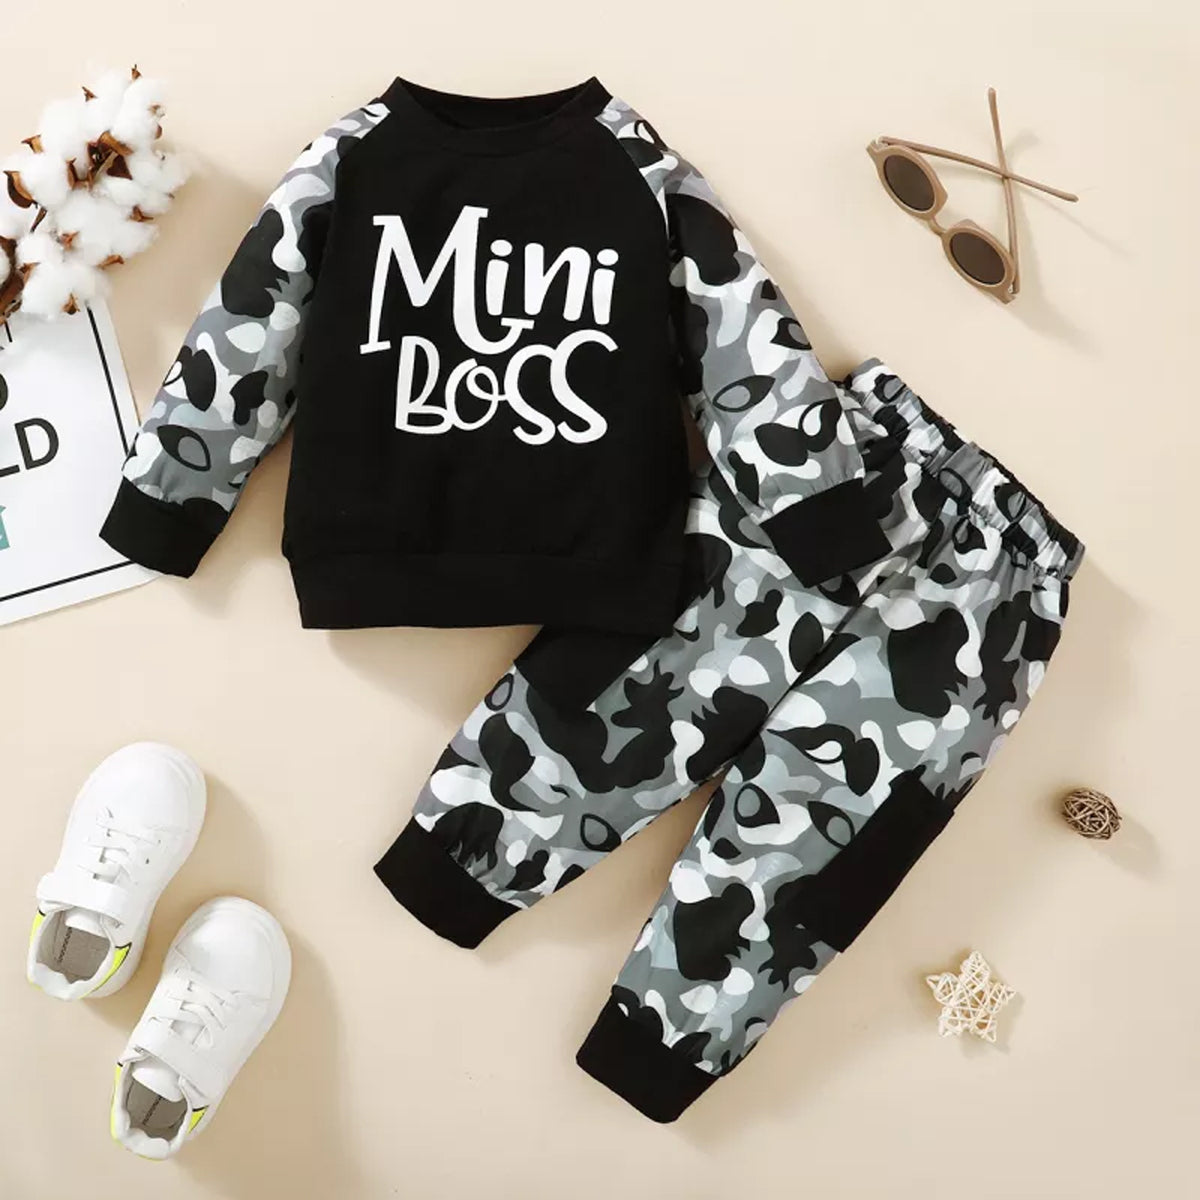 Venutaloza Stylish Baby Set Mini Boss & Letter Graphic & Multi Graphic (Combo Pack Of 3) T-Shirt & Pants.